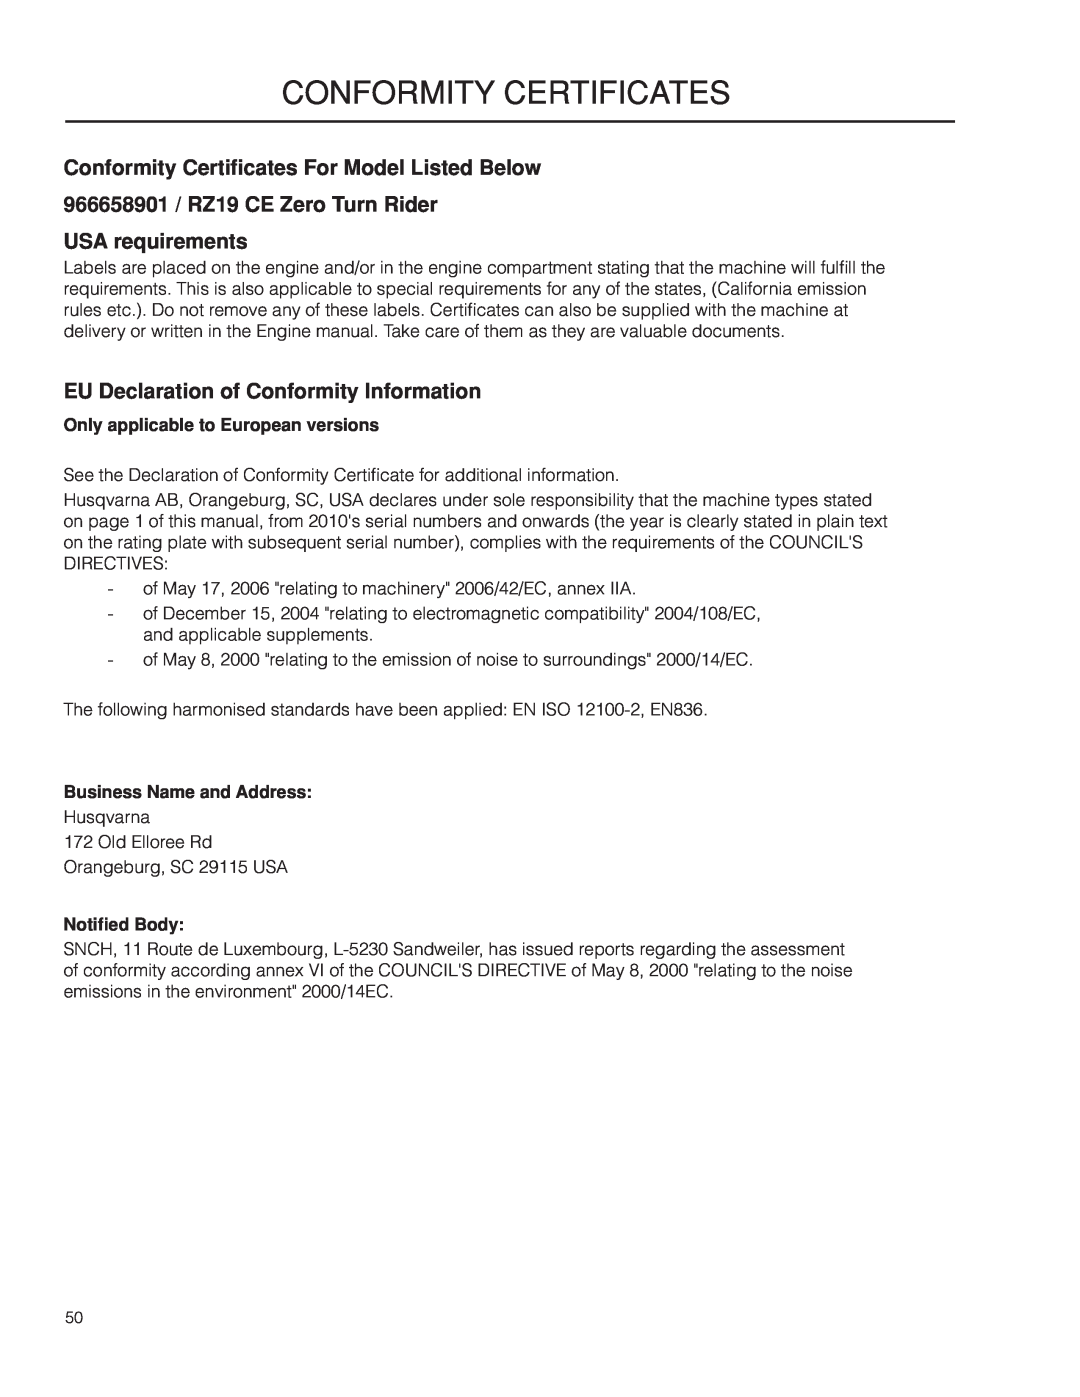 Husqvarna RZ19 CE / 966658901 manual CONForMITY CERTIFICATES, USA requirements, EU Declaration of Conformity Information 